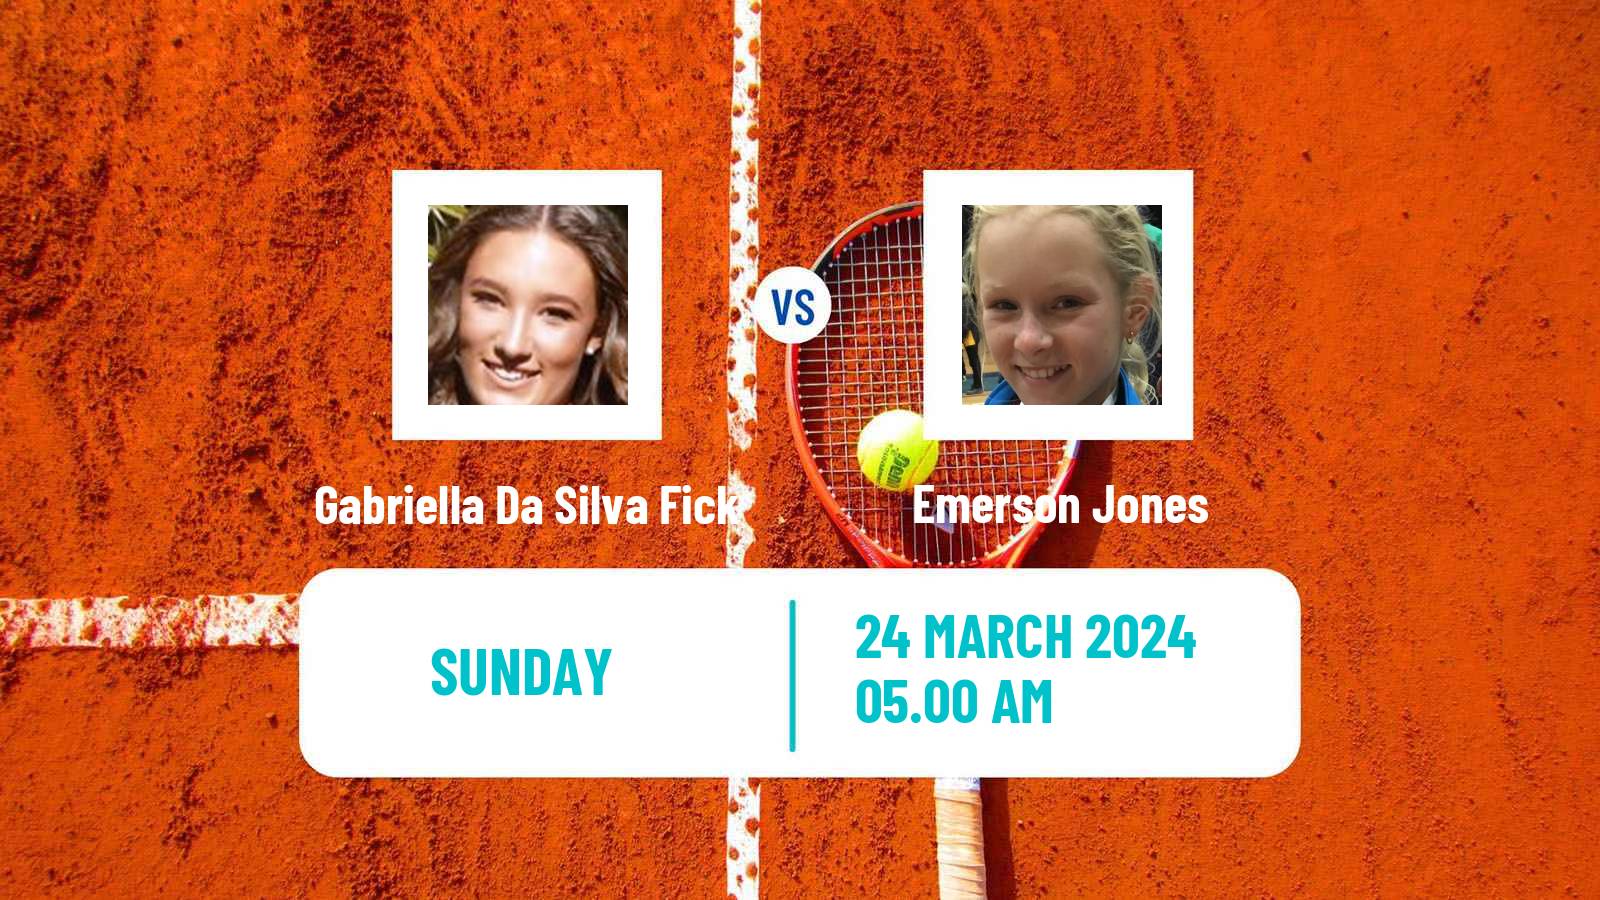 Tennis ITF W35 Swan Hill Women Gabriella Da Silva Fick - Emerson Jones